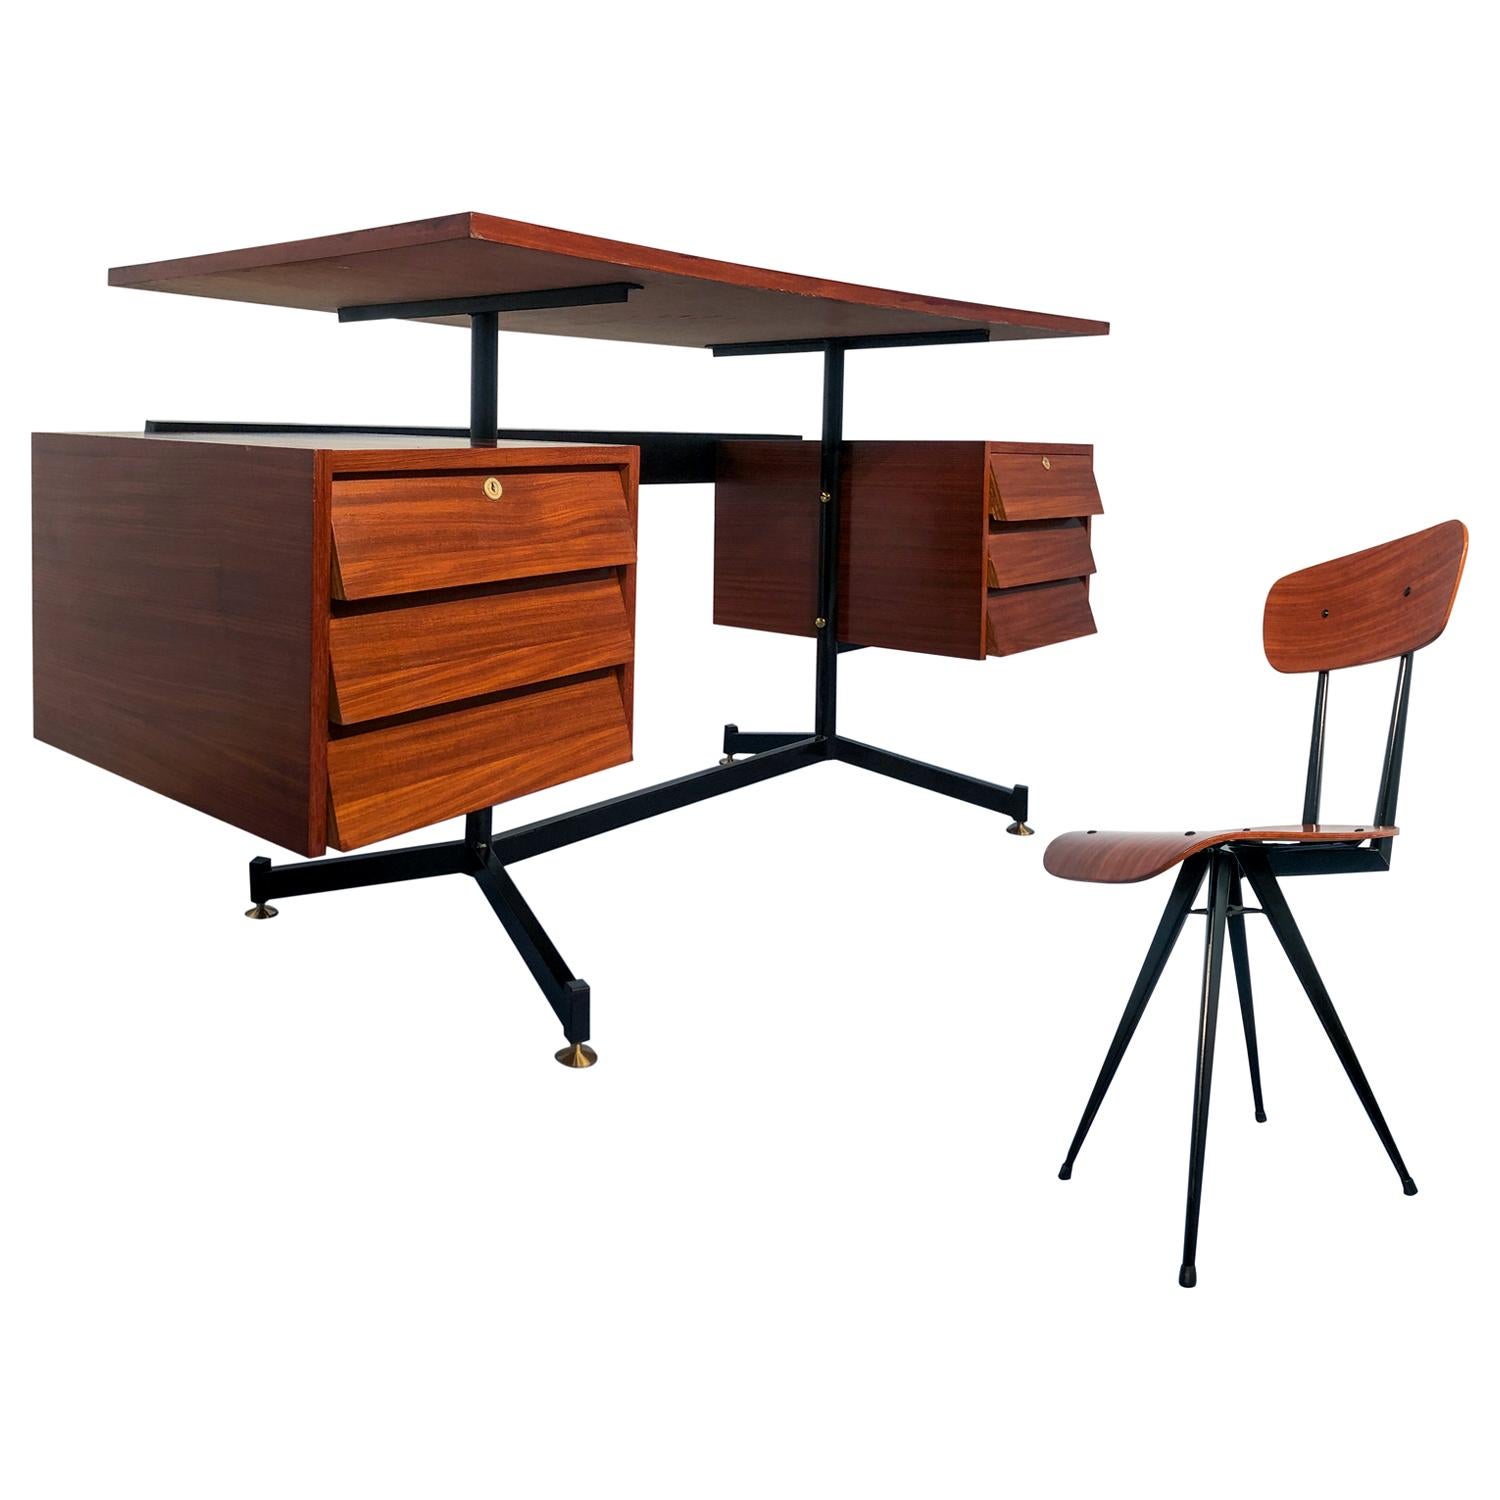 Italian Mid-Century Modern Teak Desk with Chair, 1950s